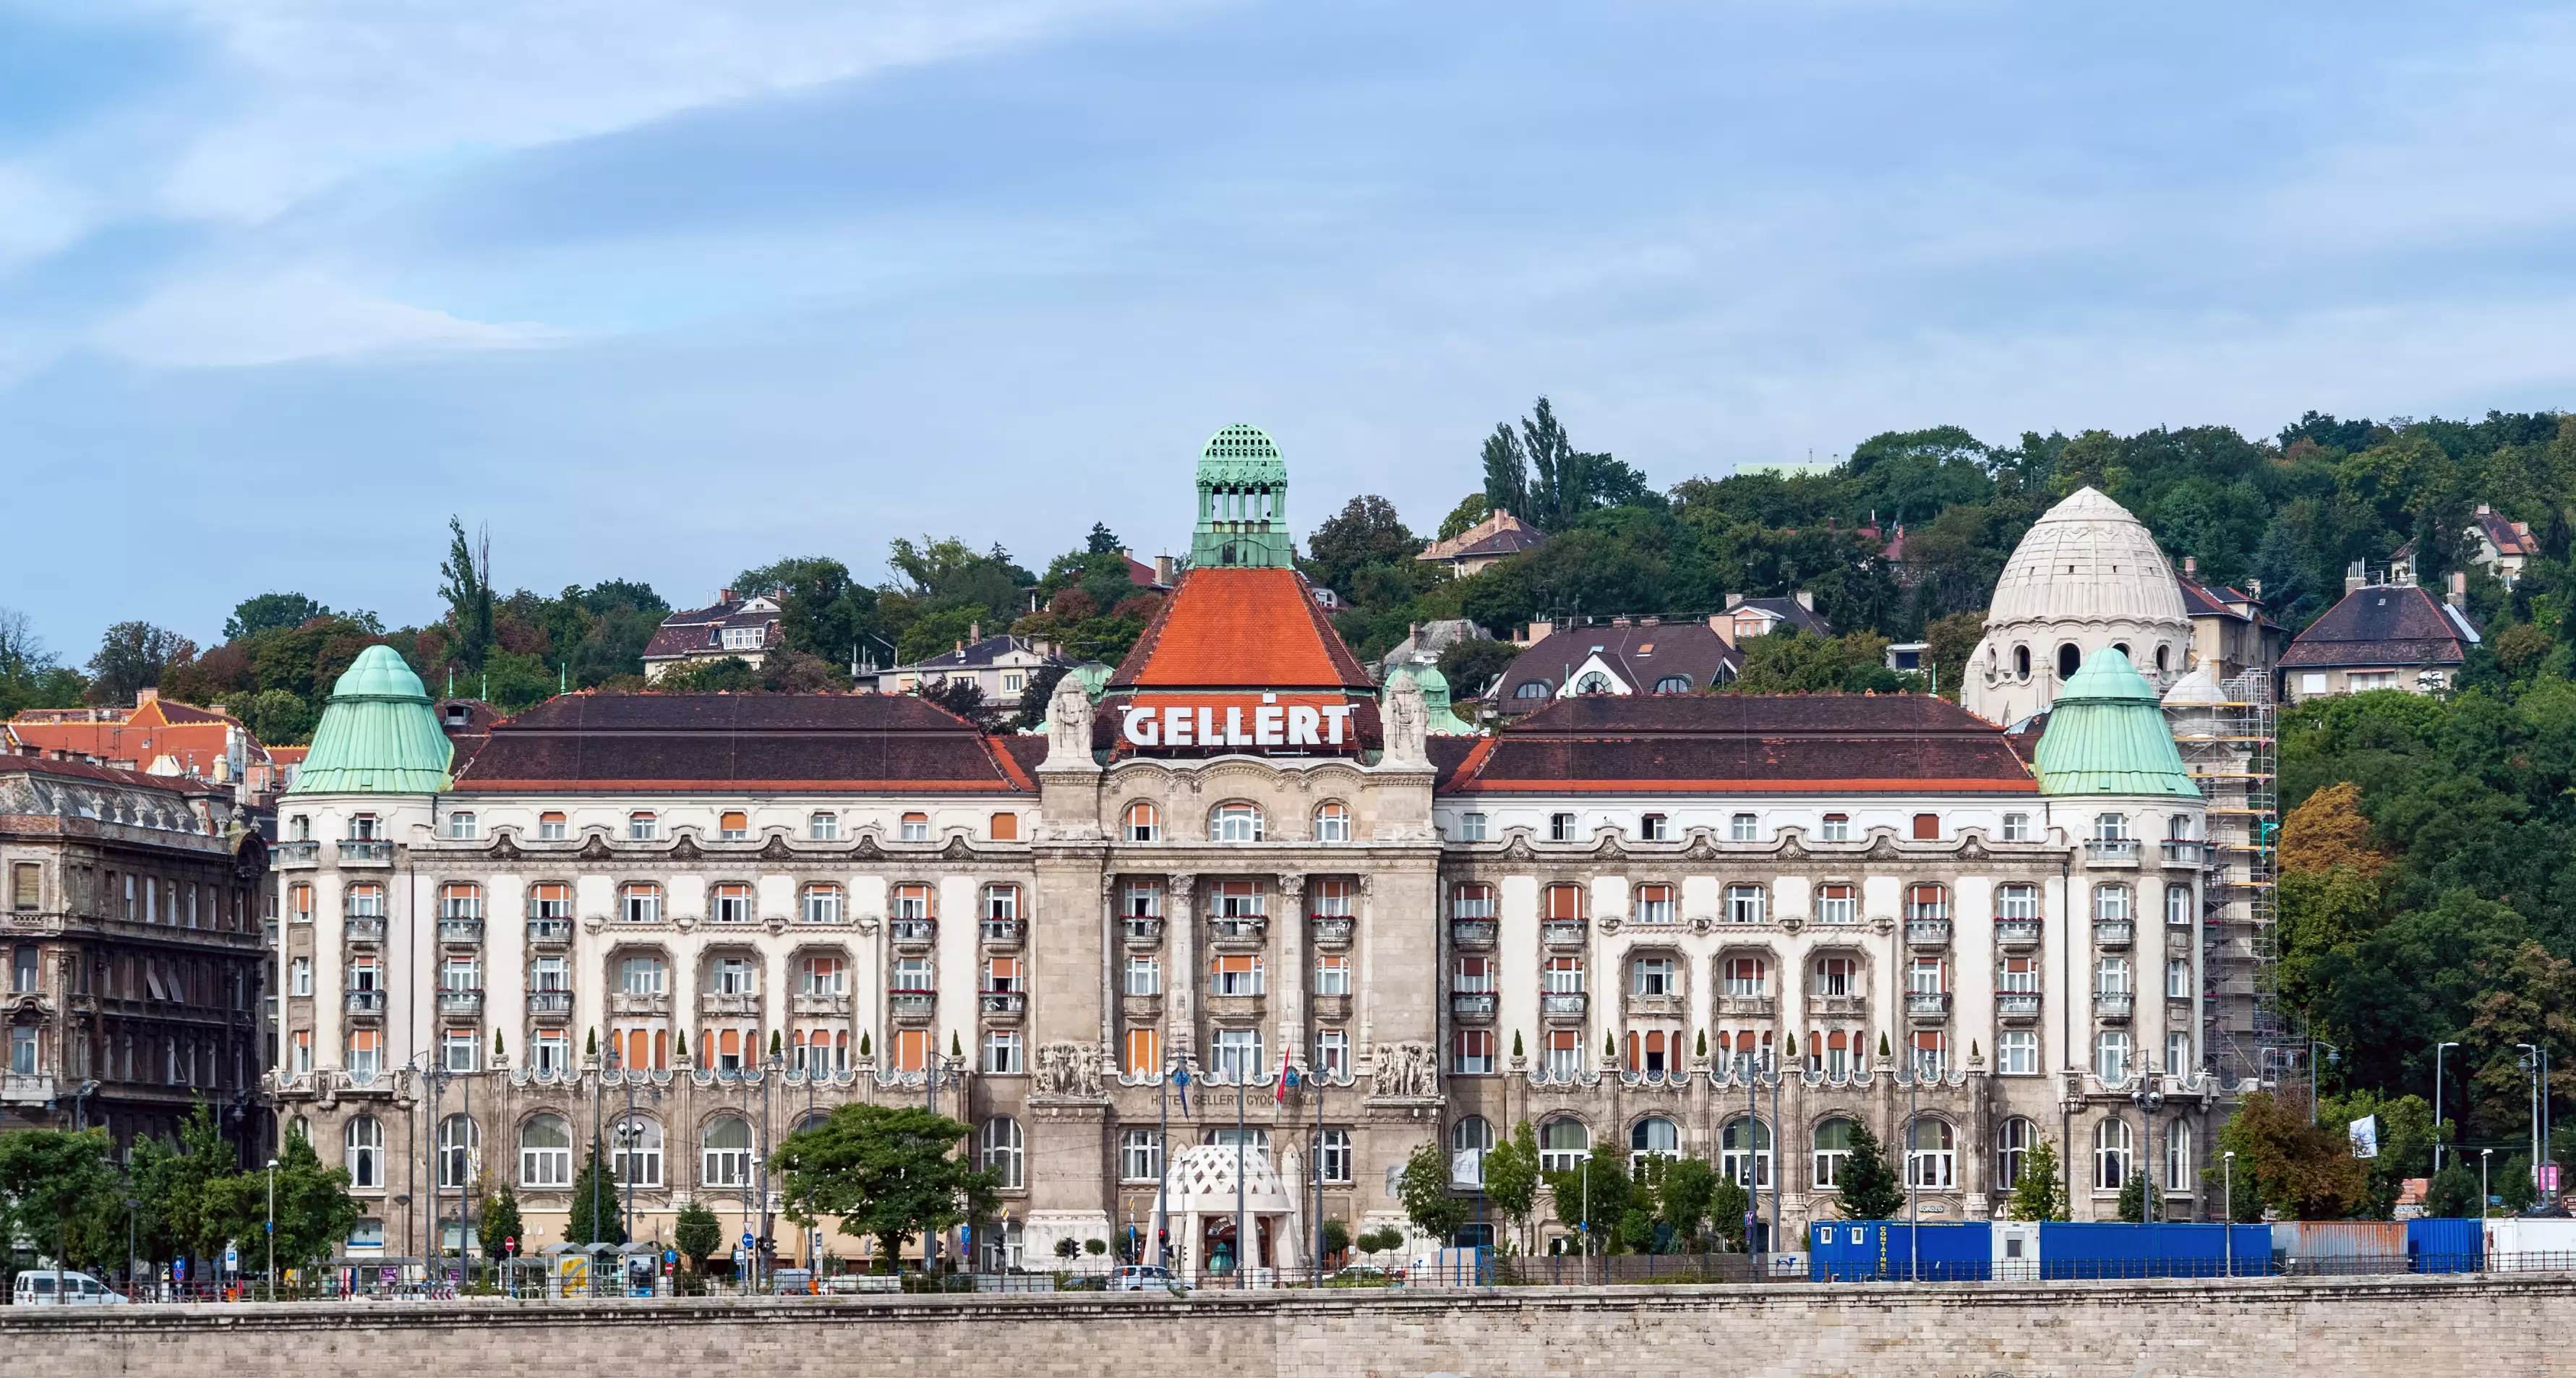 Фасад отеля "Геллерт" в Будапеште